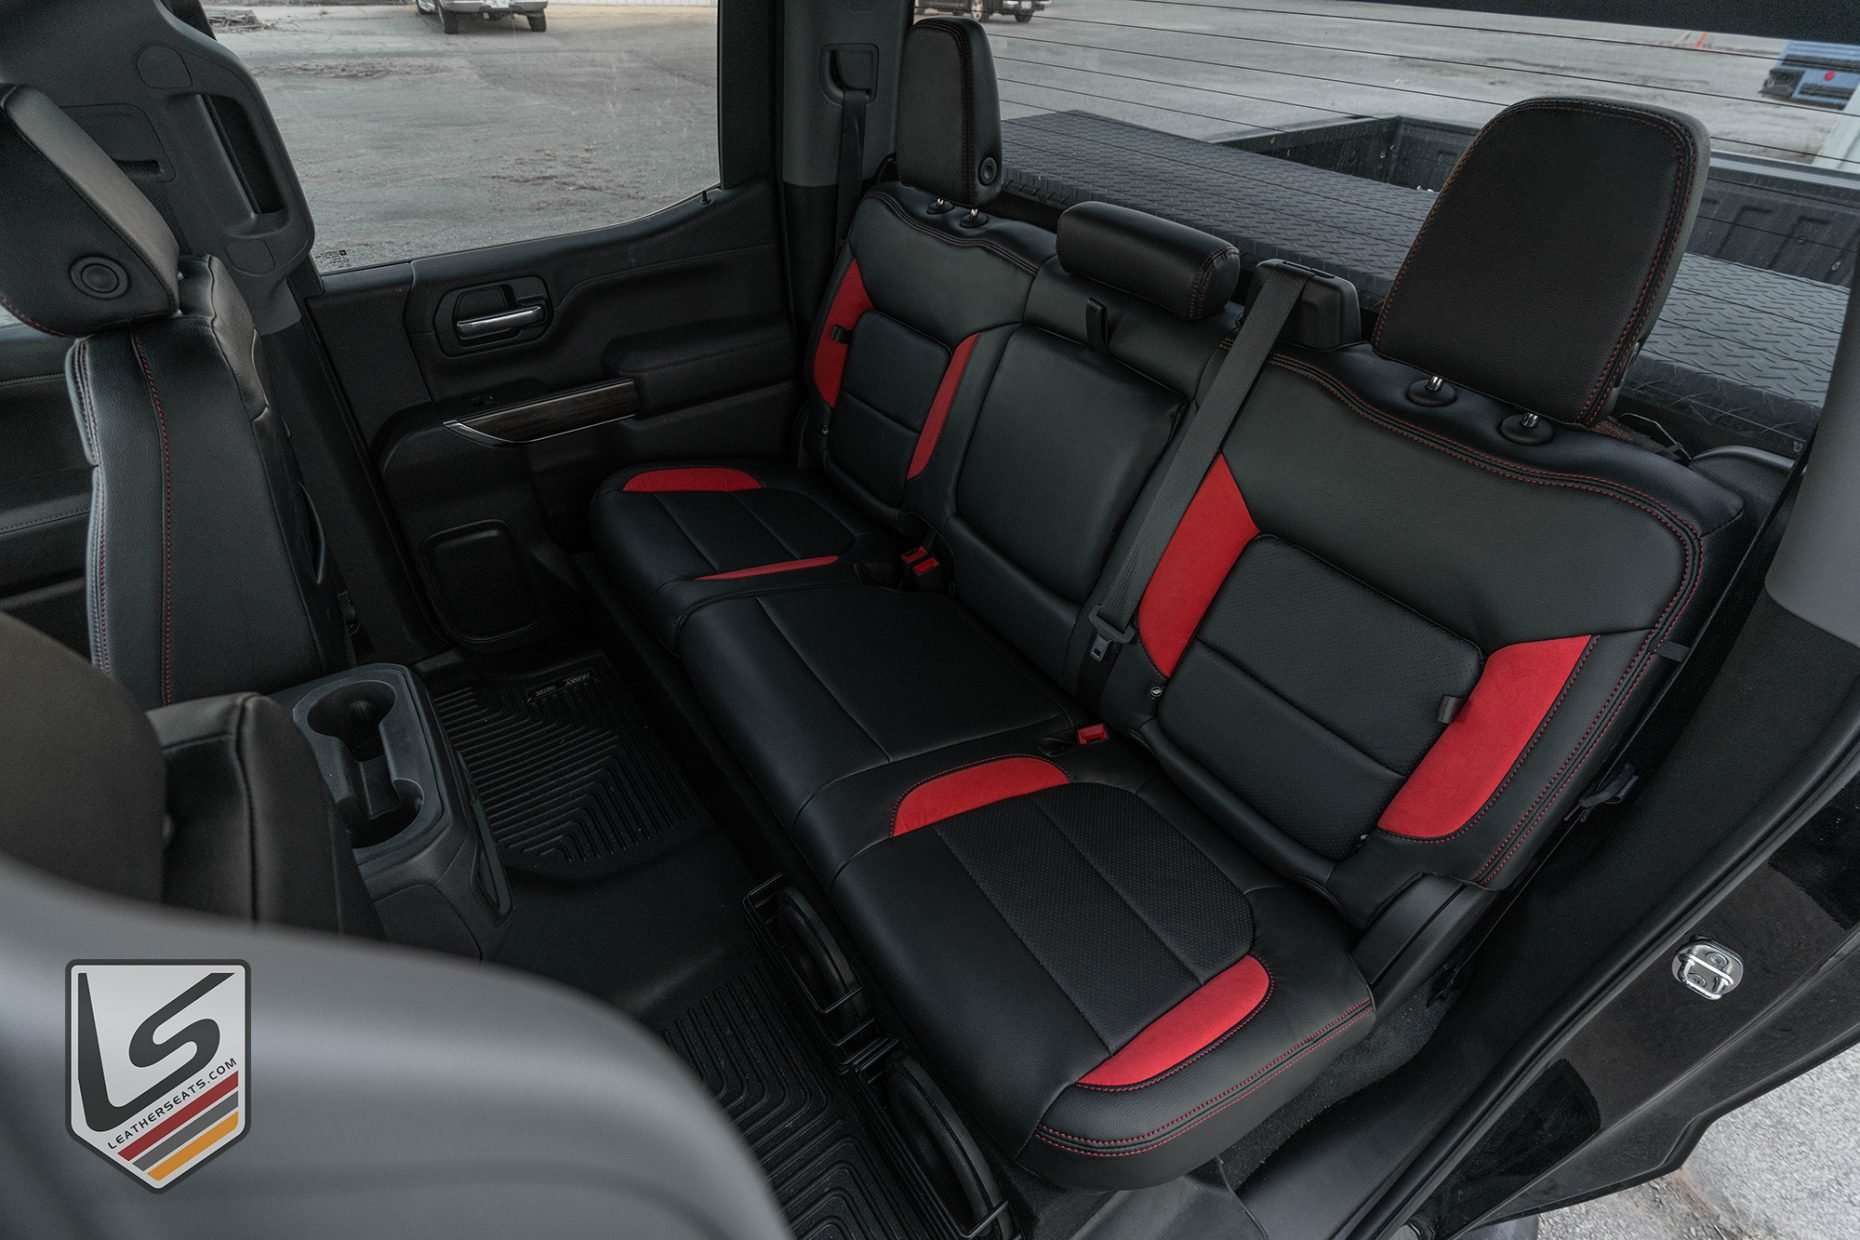 Chevrolet Silverado Crew Cab with custom leather seats - Black/Red Suede - Gallery Image